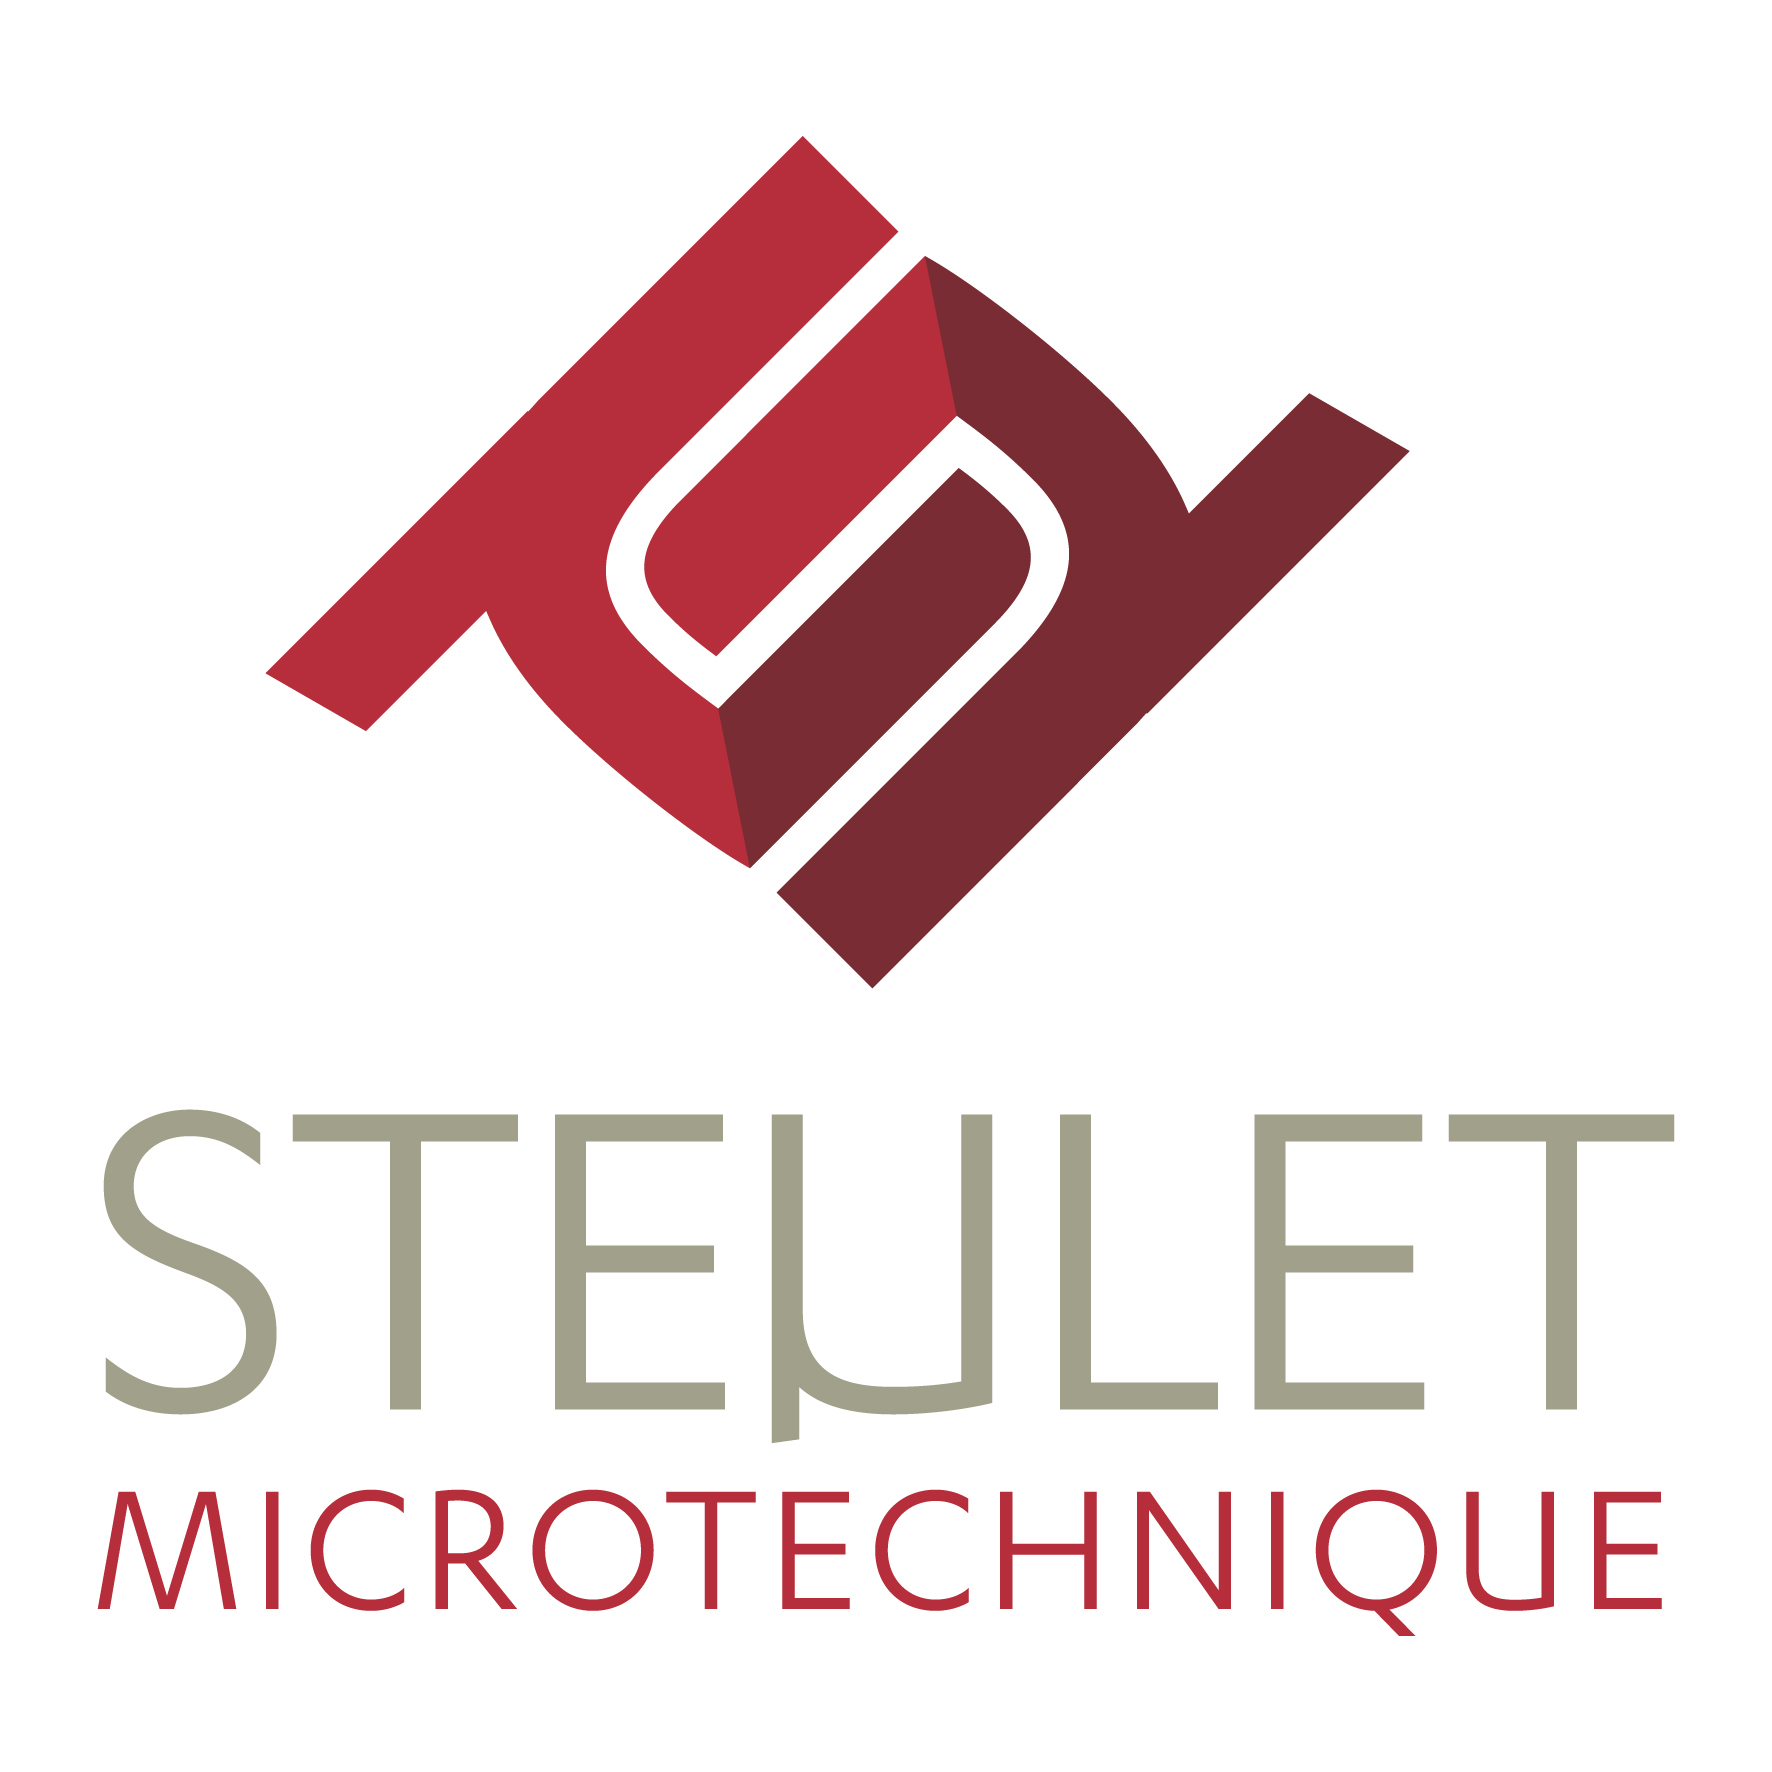 Steulet Microtechnique